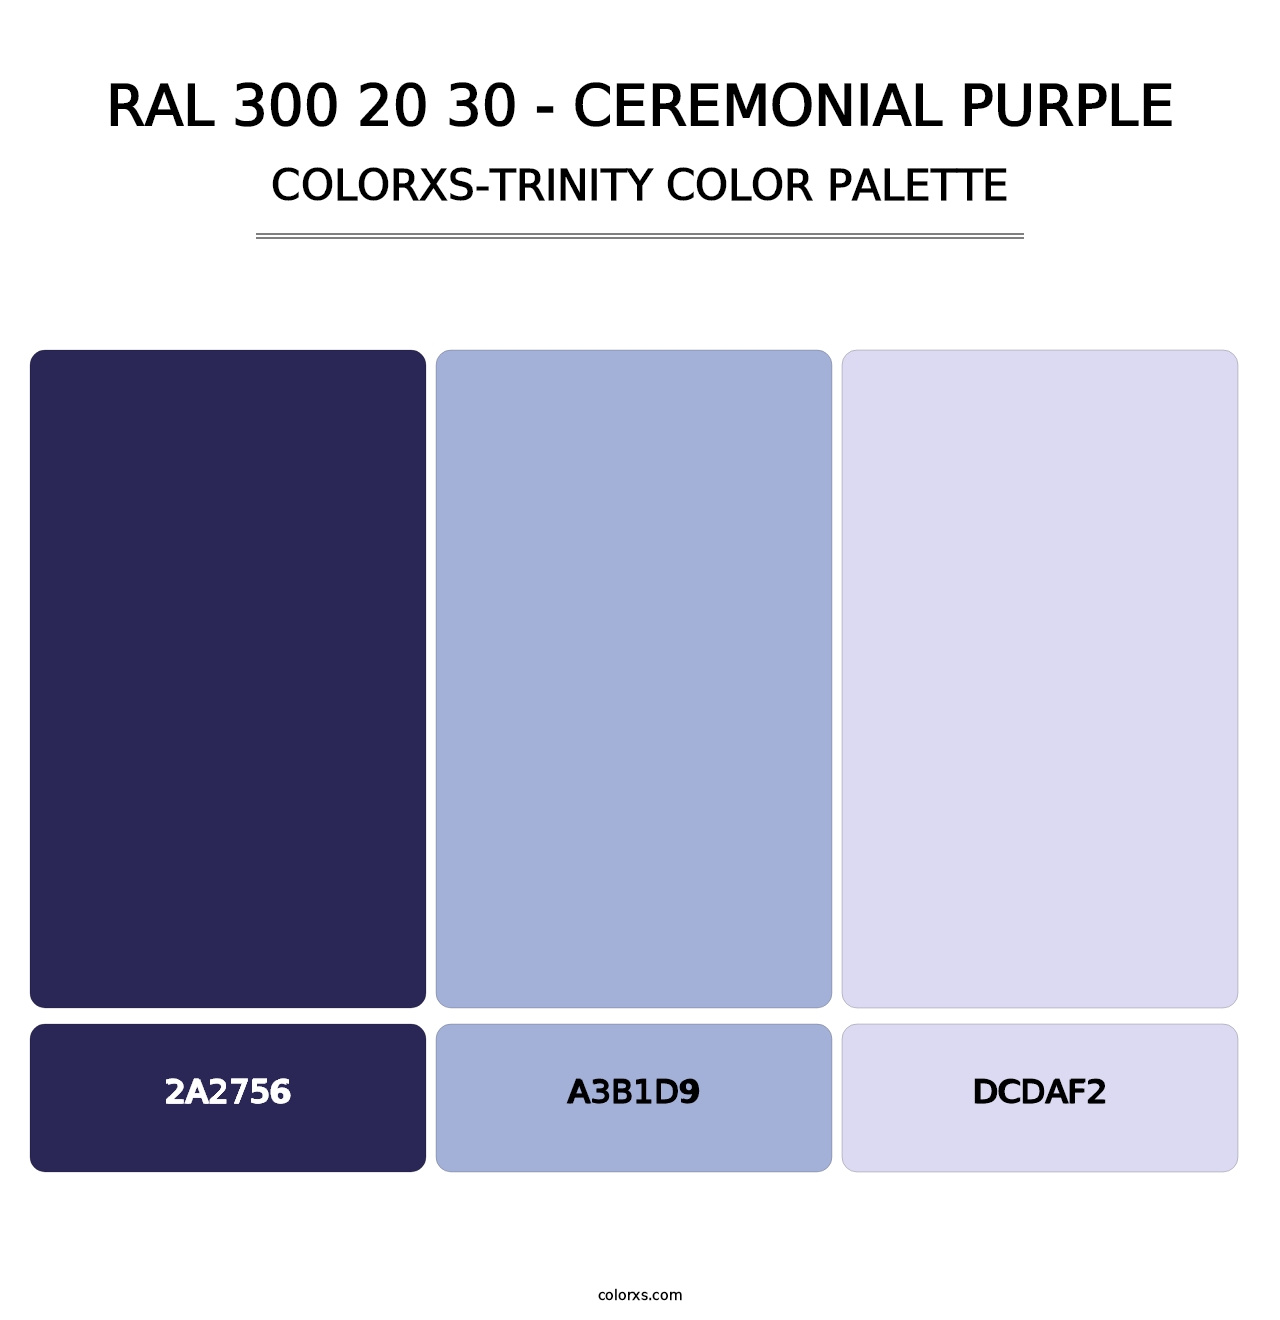 RAL 300 20 30 - Ceremonial Purple - Colorxs Trinity Palette